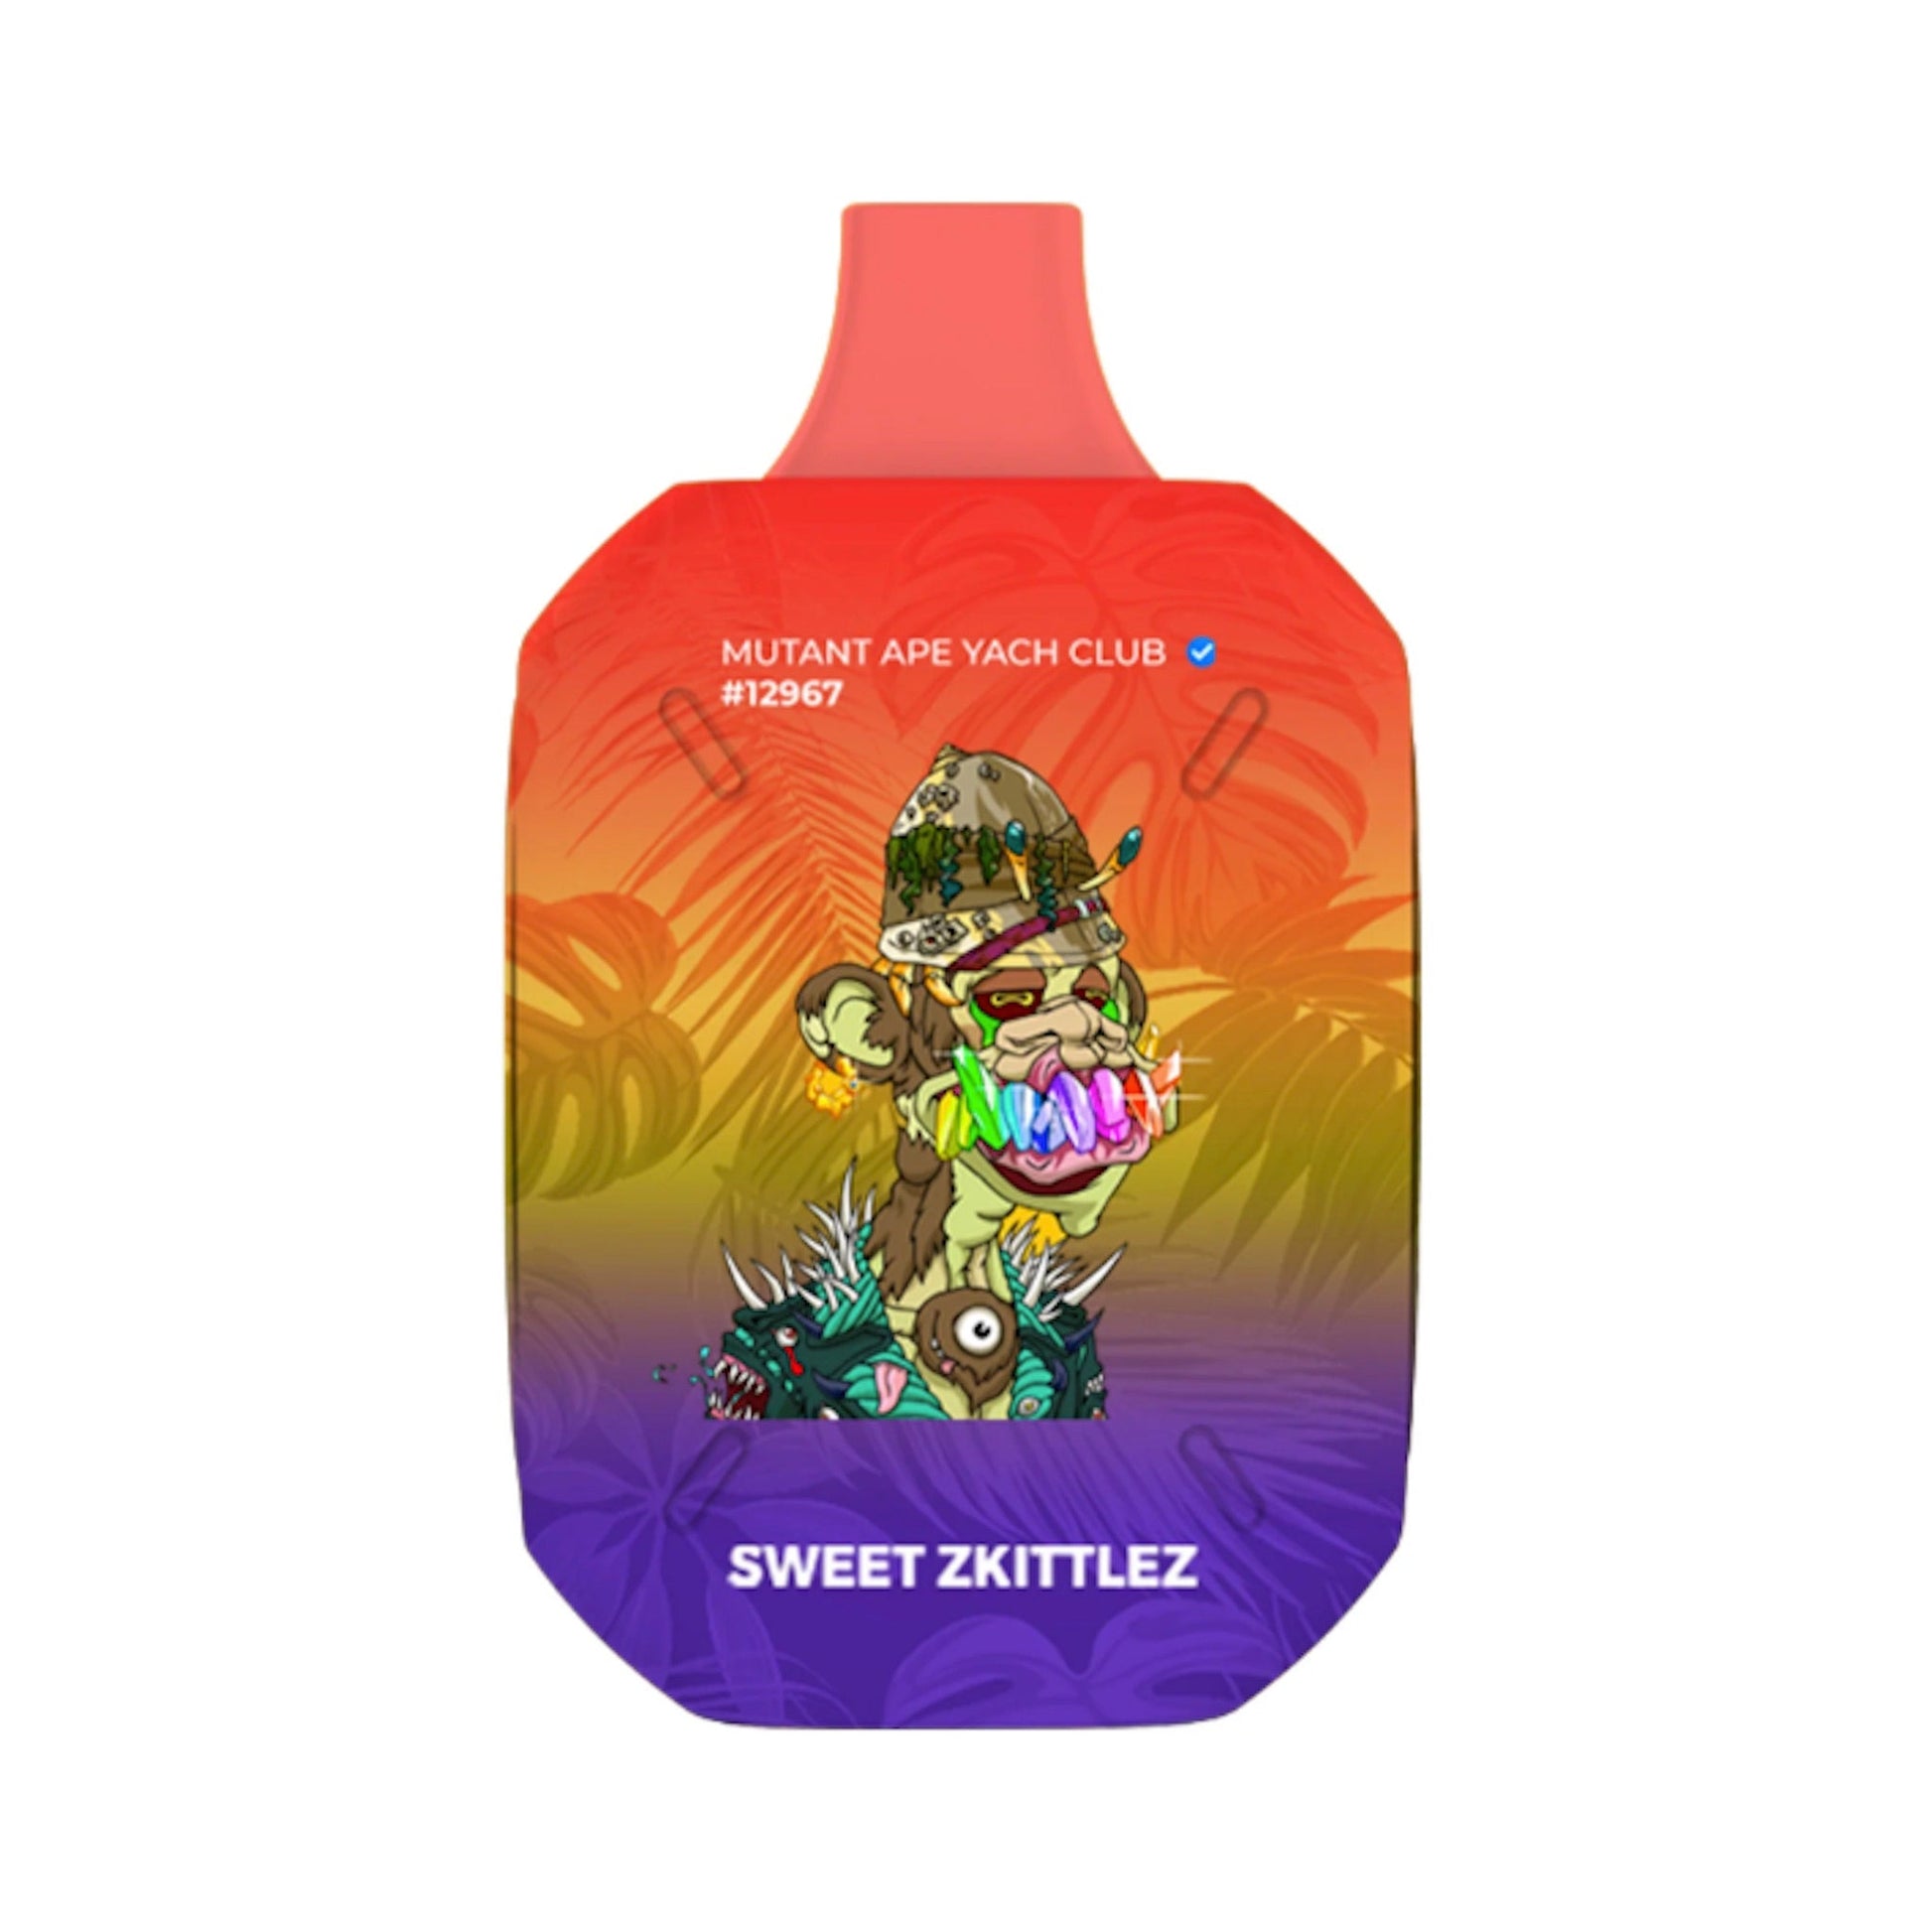 Sweet Lyfe x Ugly Monkey Blend Vaporizer - 5500mg Sweet Zkittlez